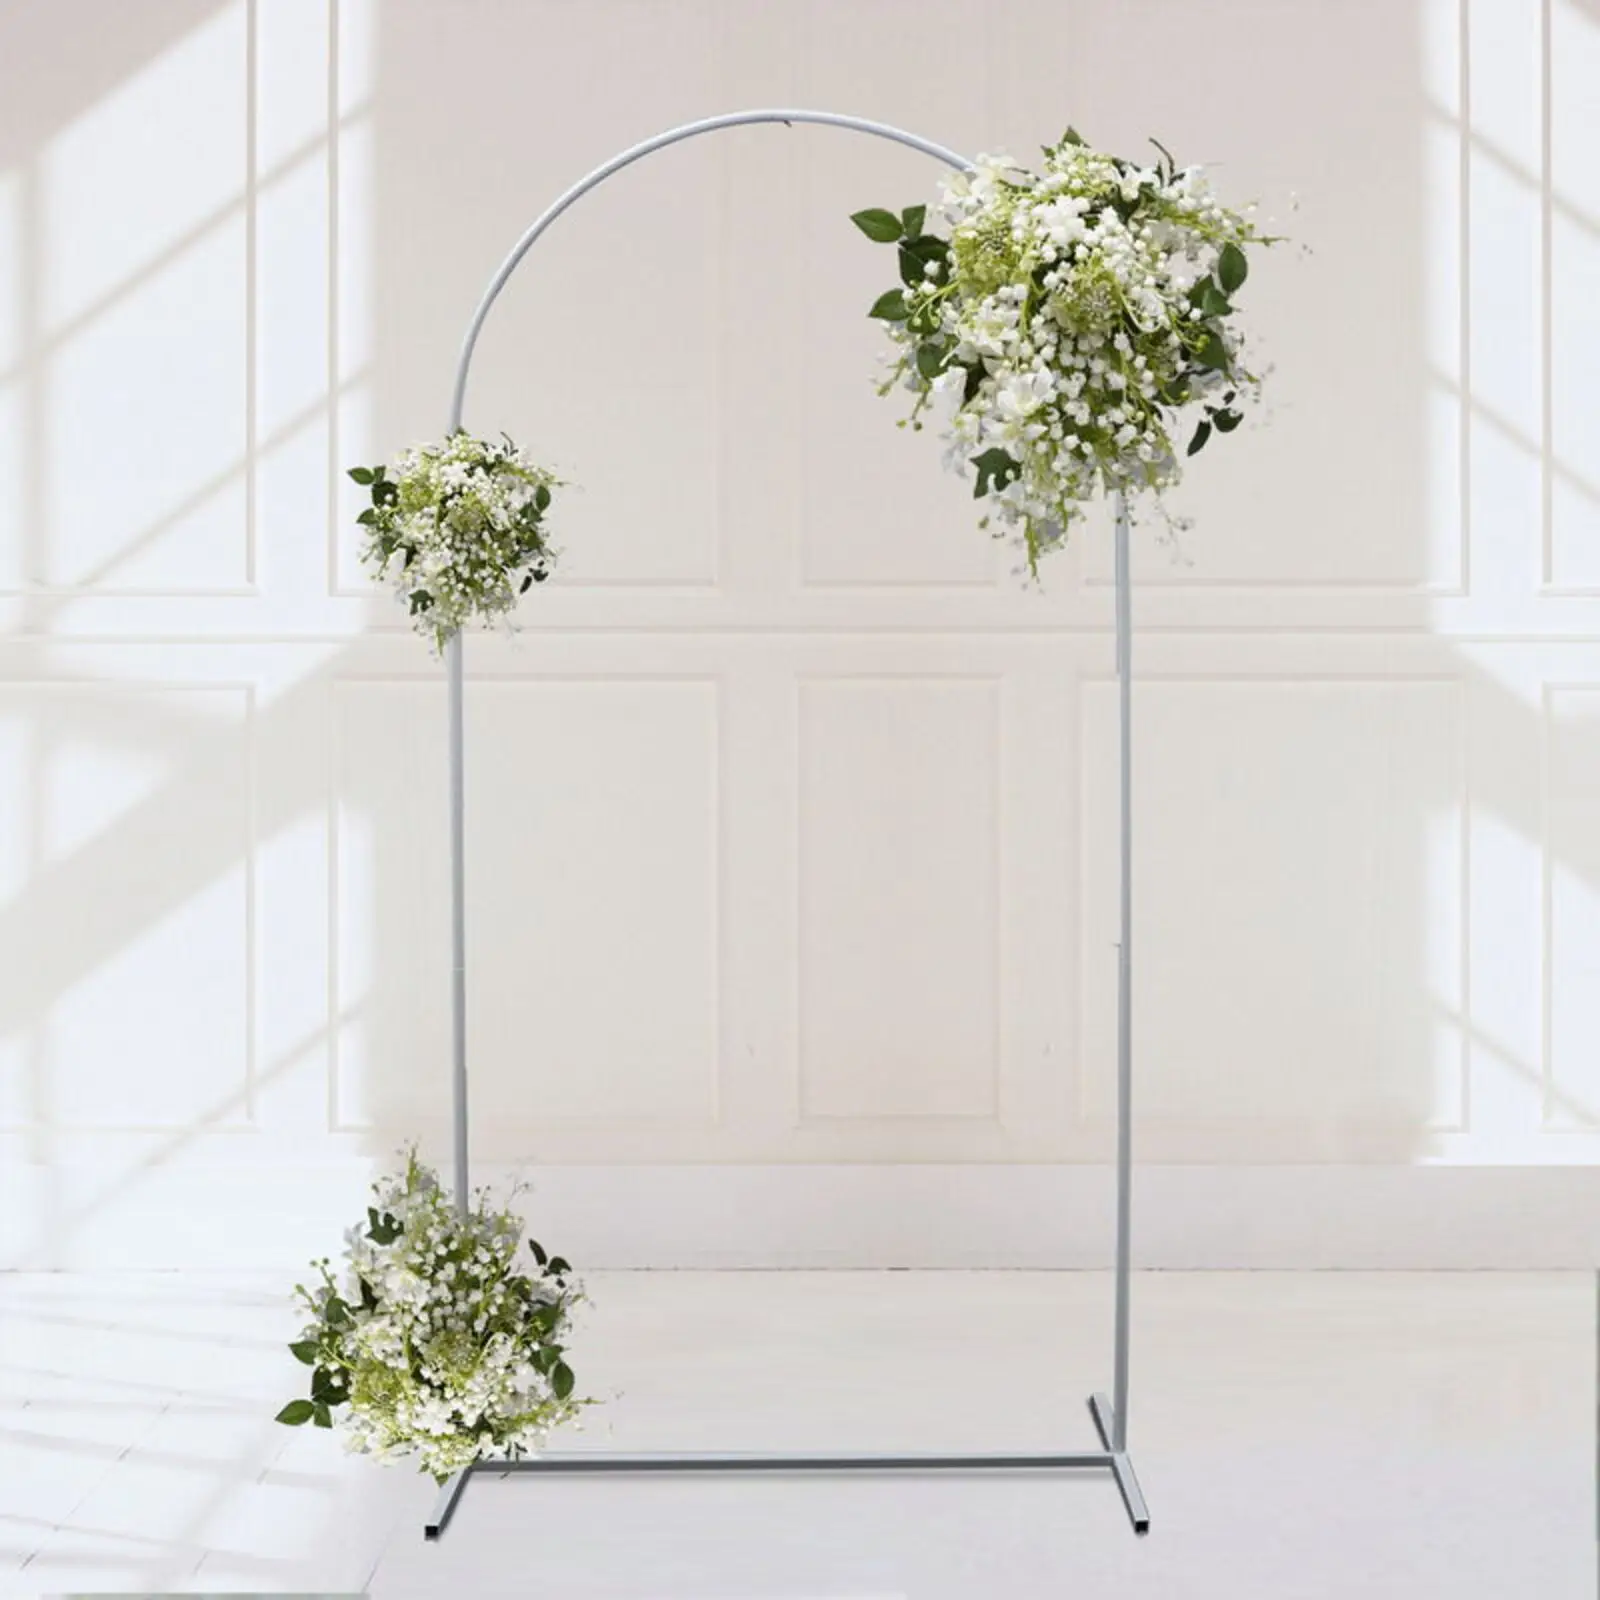 

2*1m Metal Wedding Arch Backdrop Frame Balloon Flower Stand for Party Decor Wedding Supplies Garden Decoration